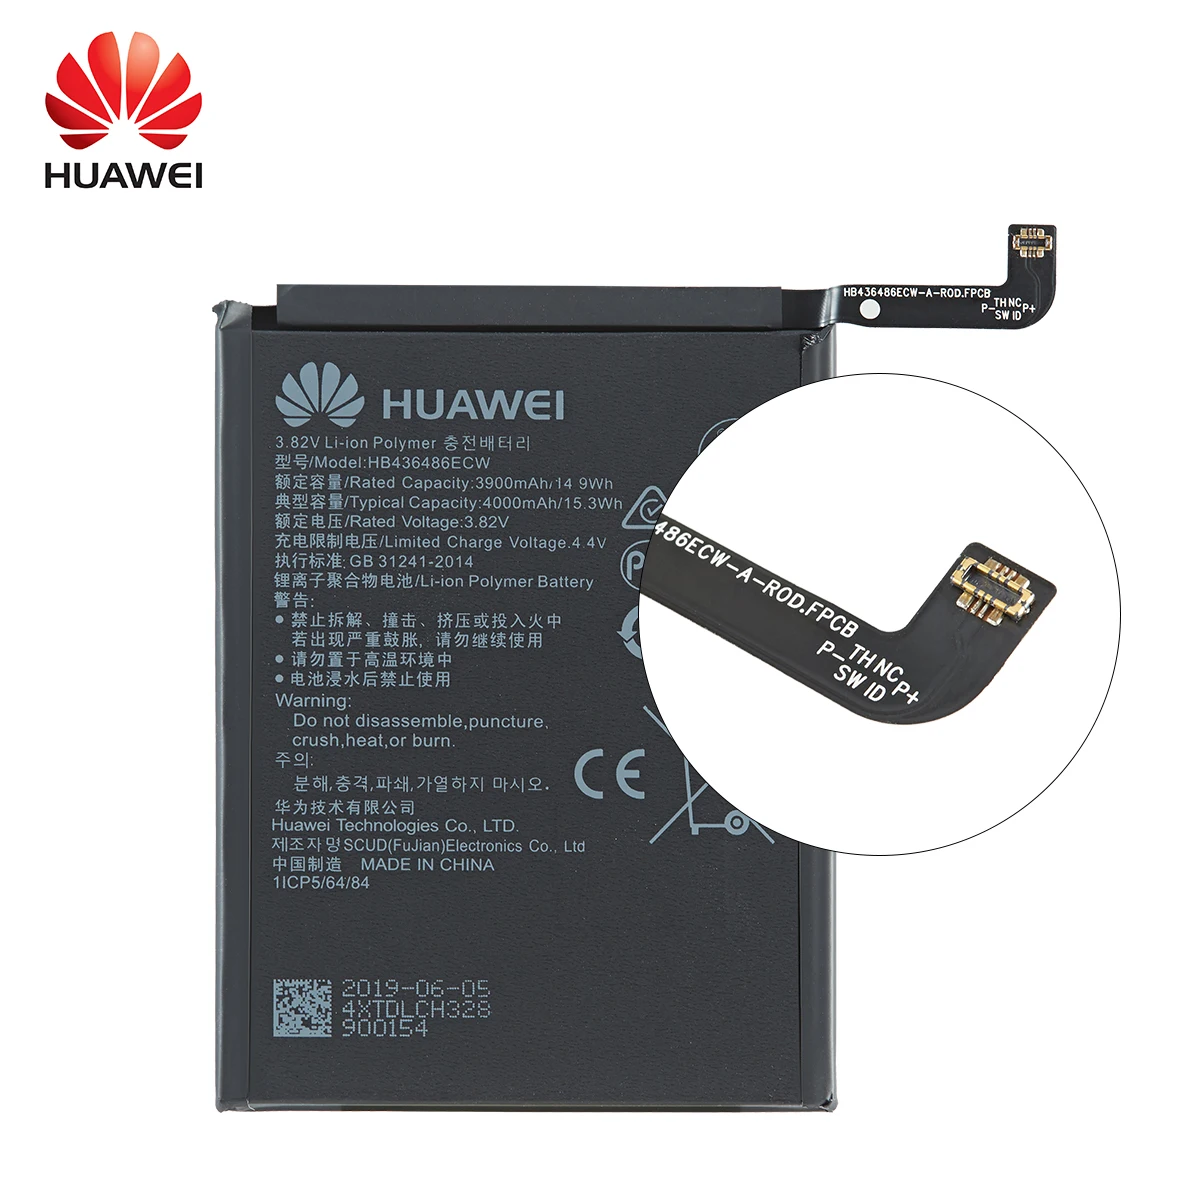 Hua Wei Originalus HB436486ECW 4000mAh Baterija Huawei Mate 10 Mate 10 Pro /P20 Pro AL00 L09 29 TL00 Baterijas +Įrankiai